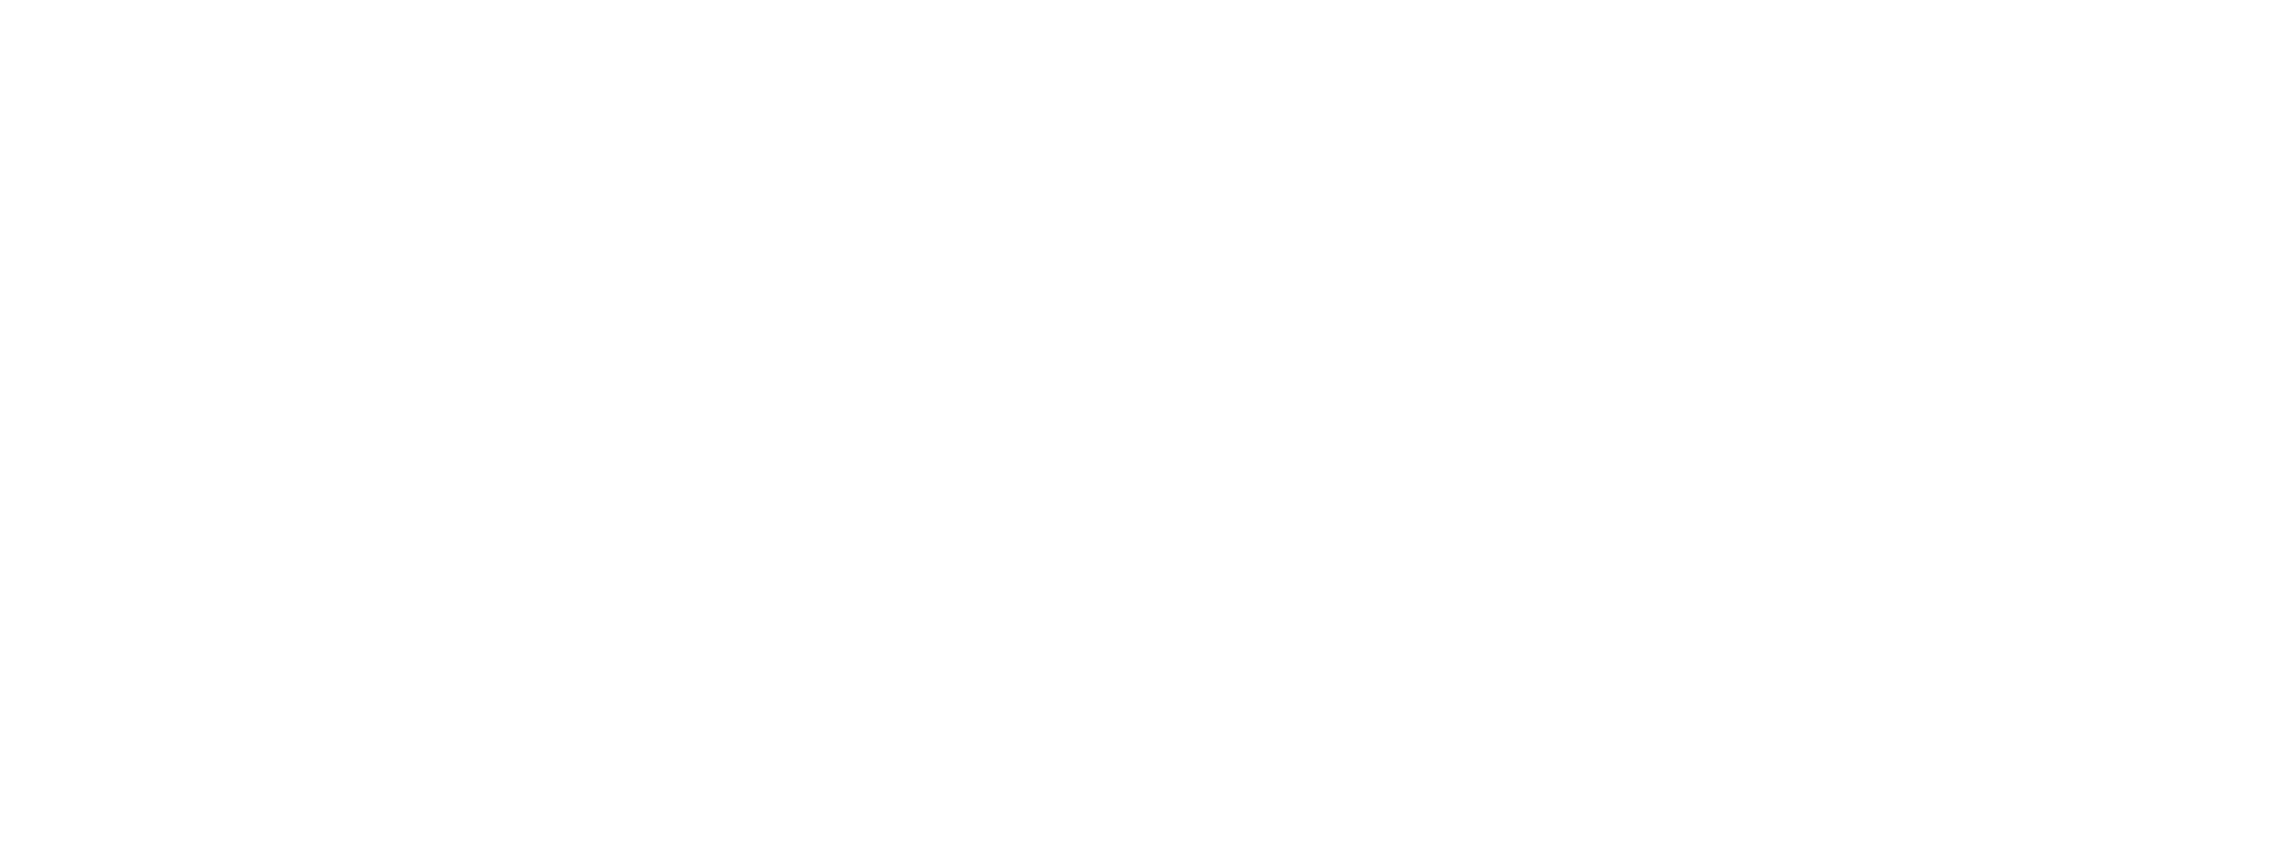 Nobuaki Kayahara